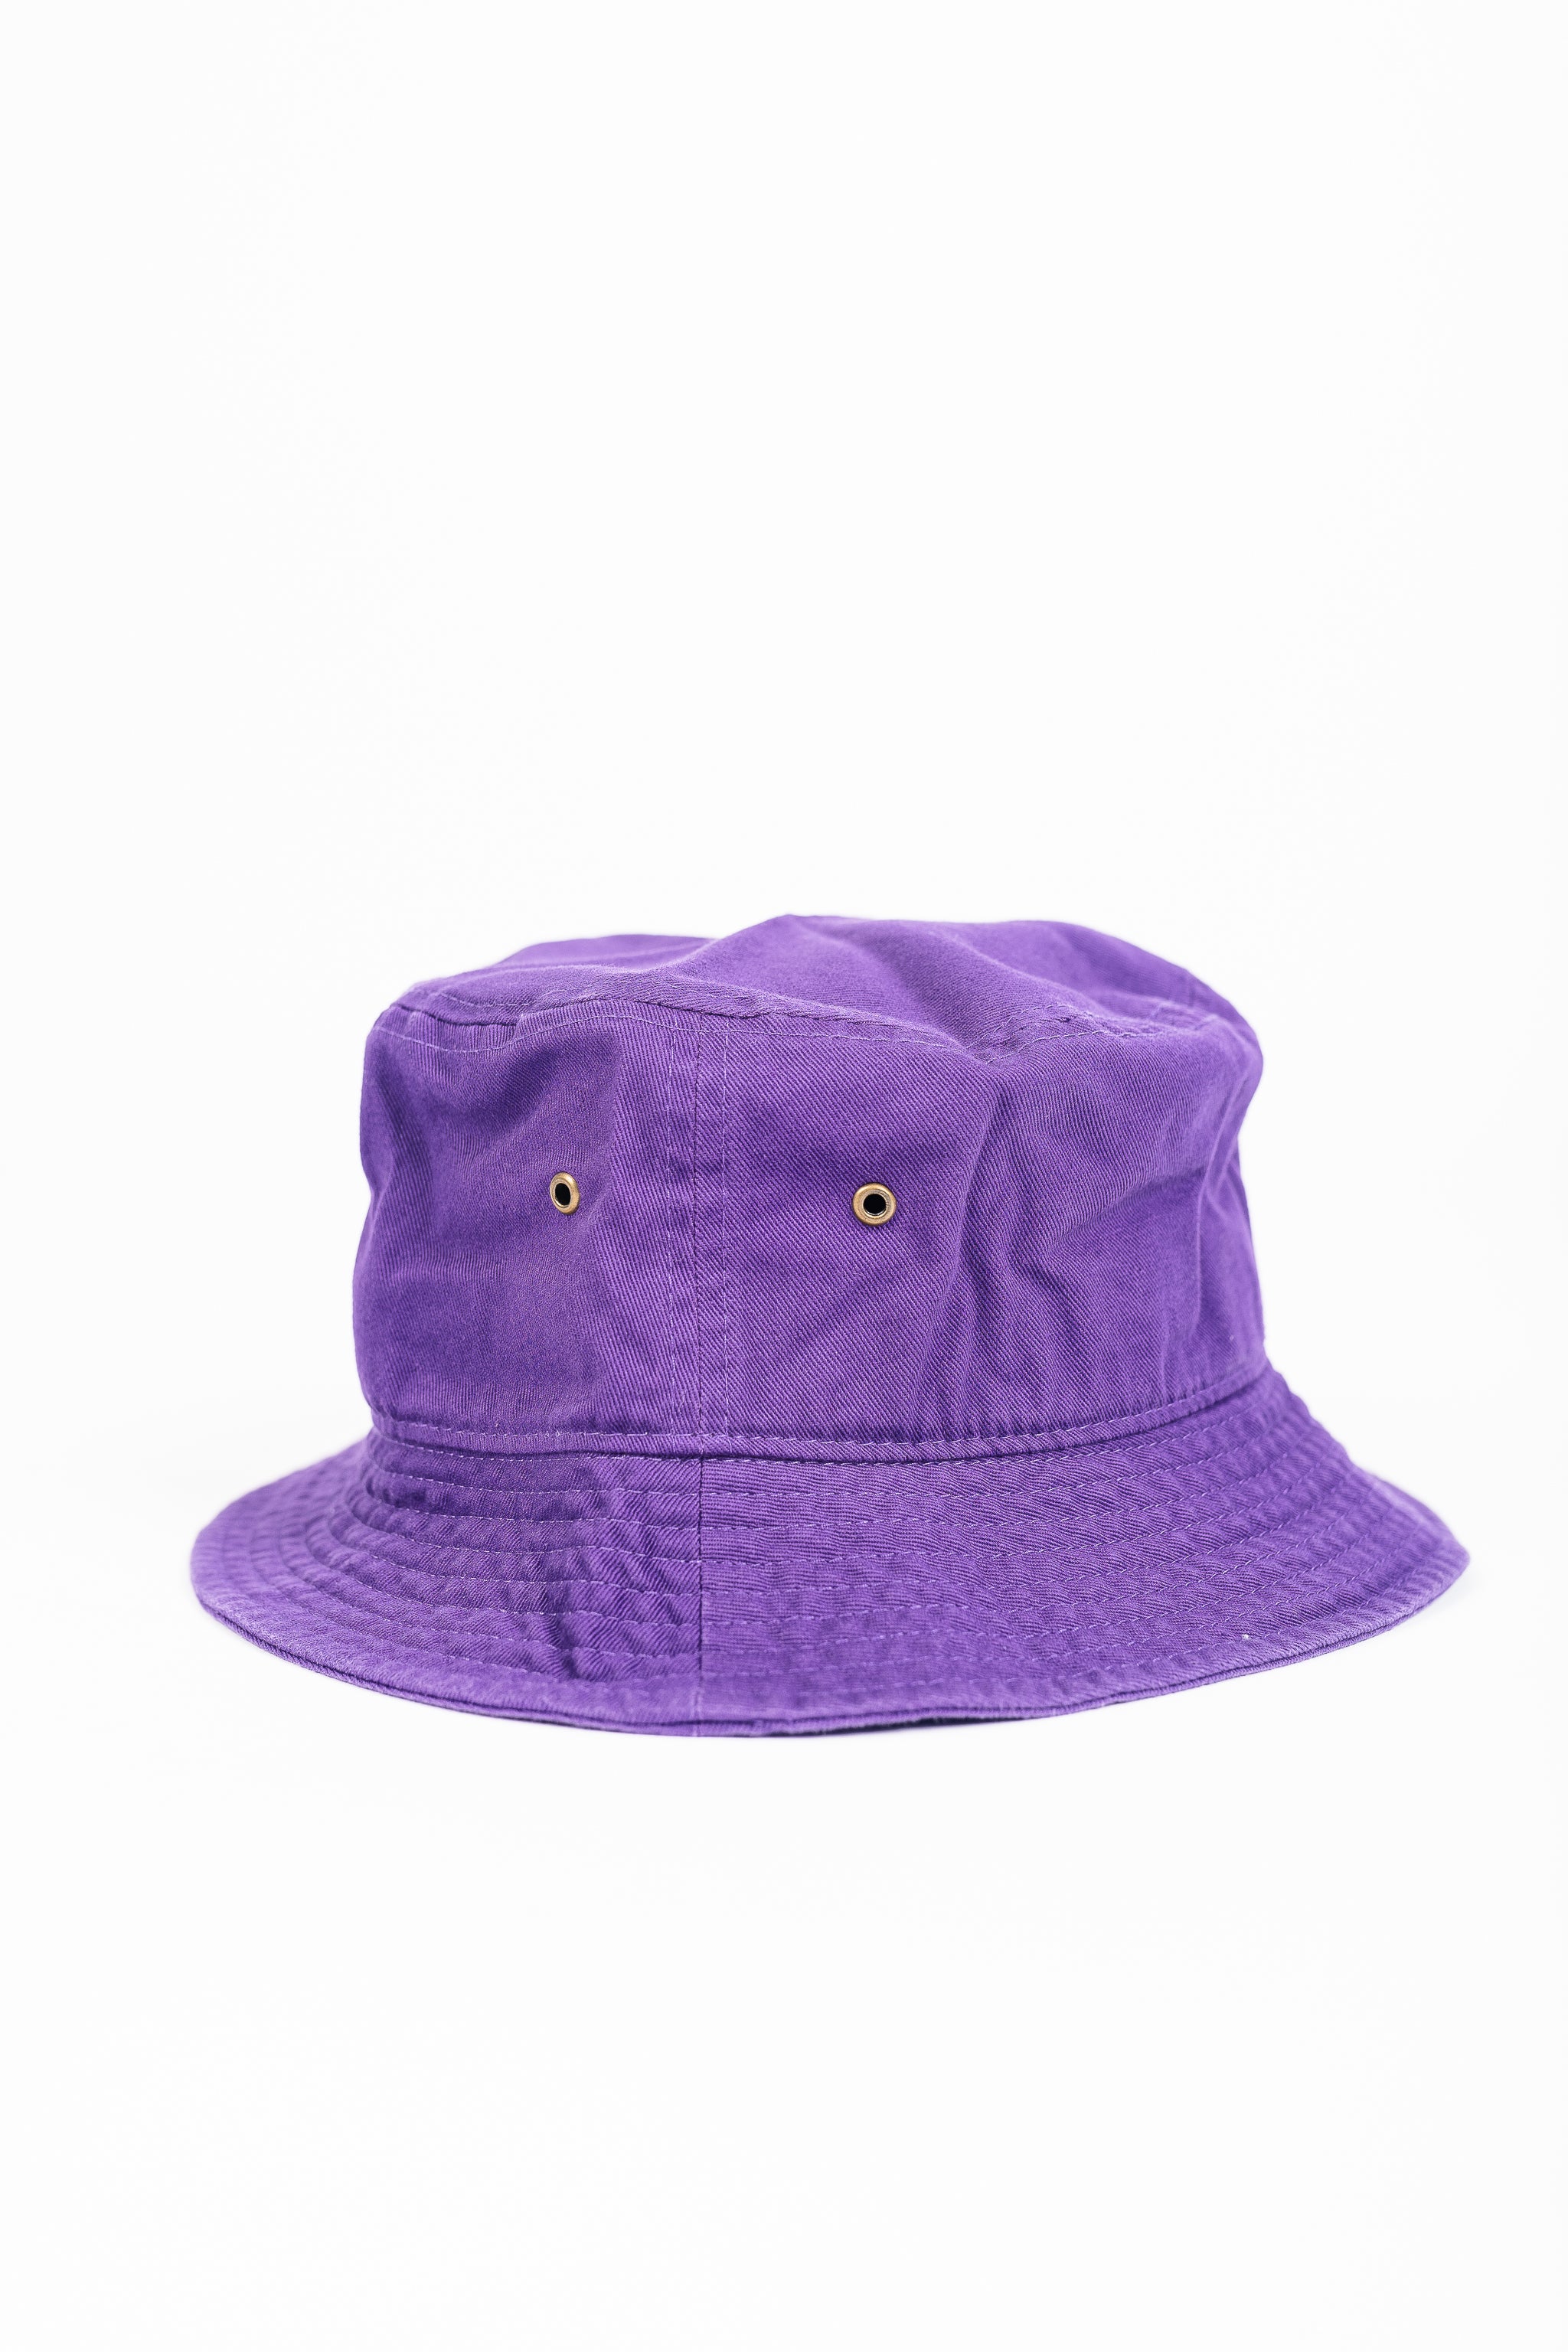 New Fashions of New York Inc 1500camo Newhattan Bucket Hat Camo